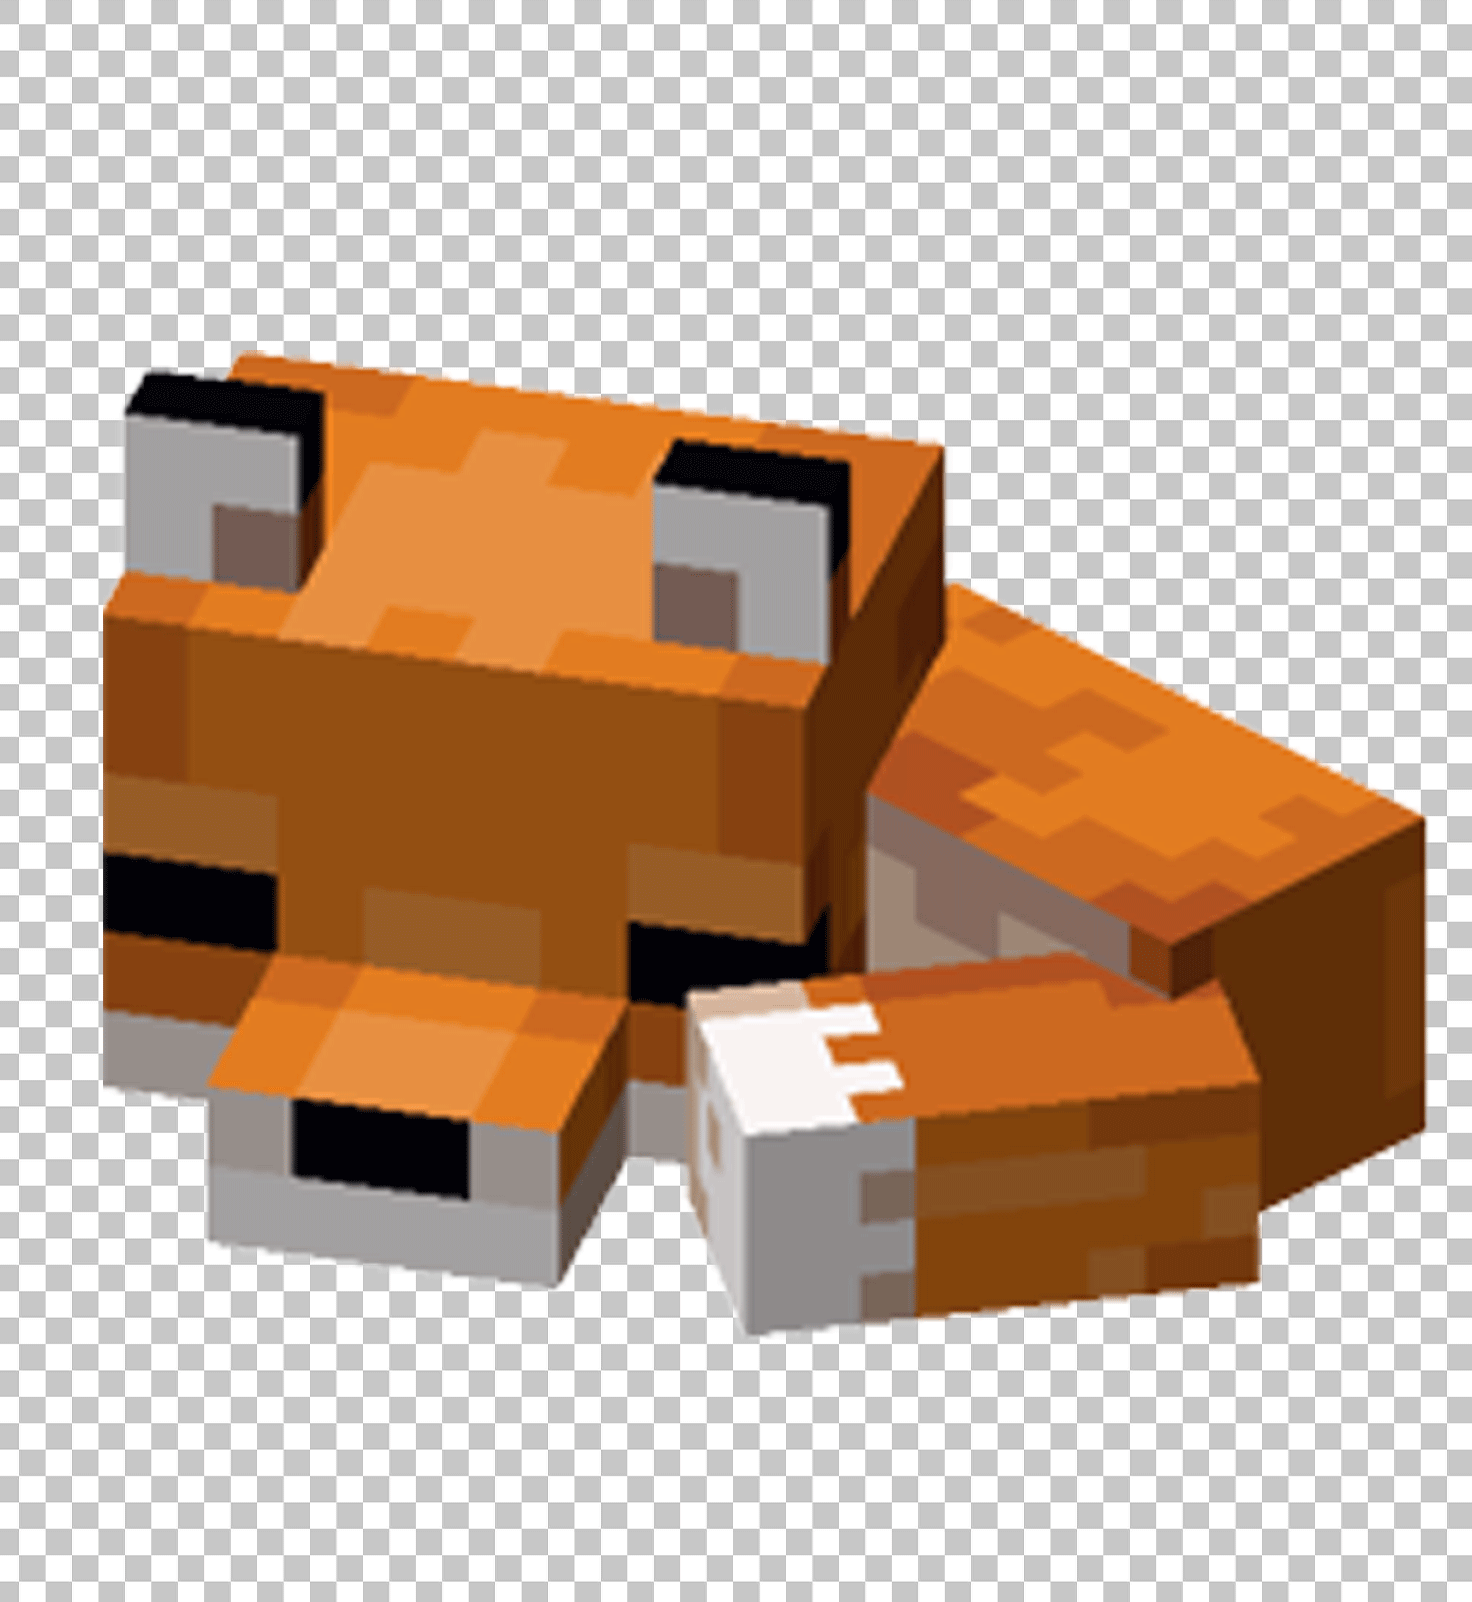 Minecraft fox sleeping PNG Image